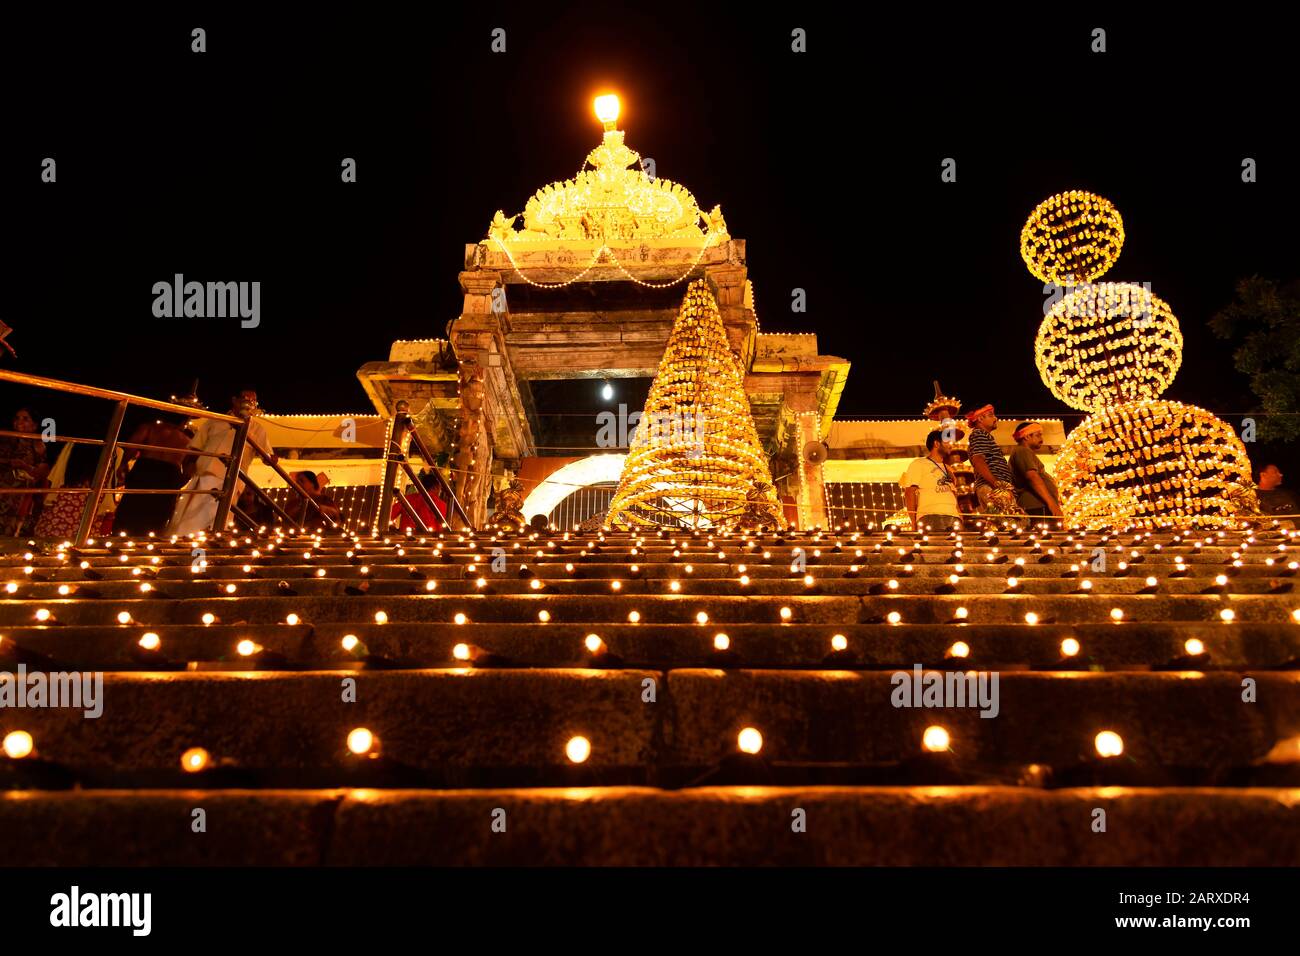 Sree padmanabhaswamy temple et padmatheertham lakshadeepam ,étang pendant la cérémonie de Thiruvananthapuram, Kerala, Inde Banque D'Images